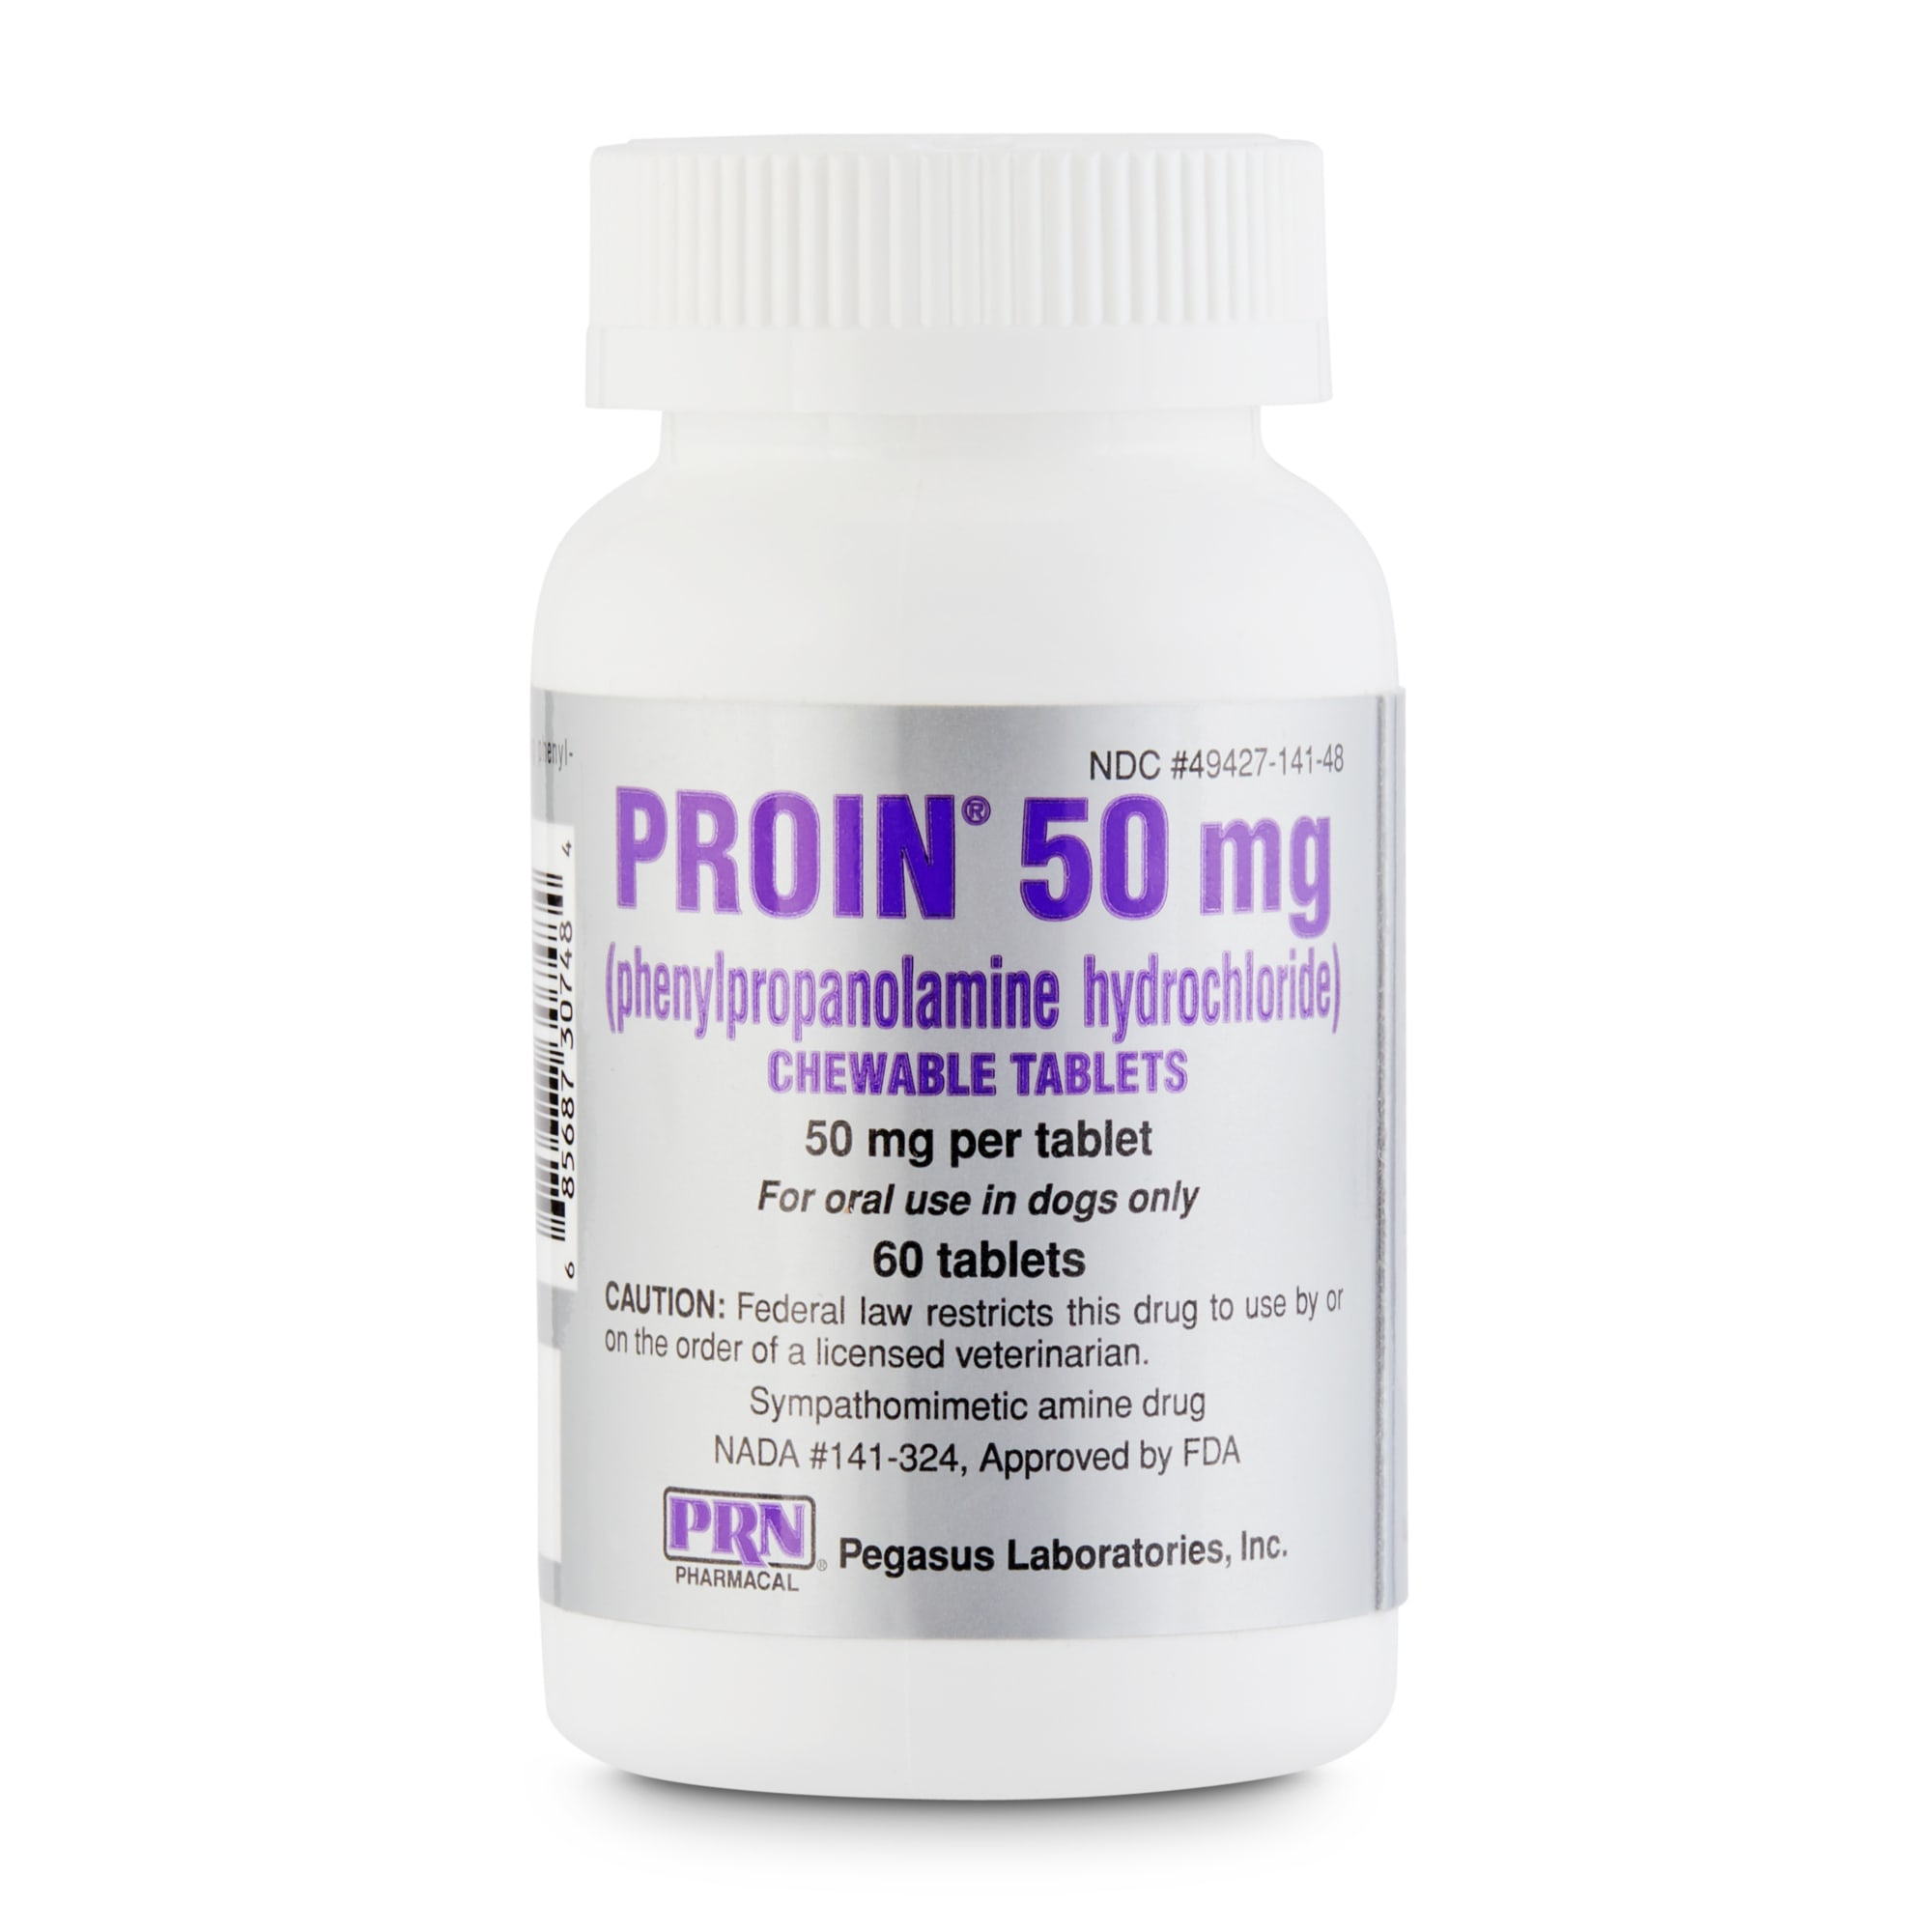 proin 25 mg side effects